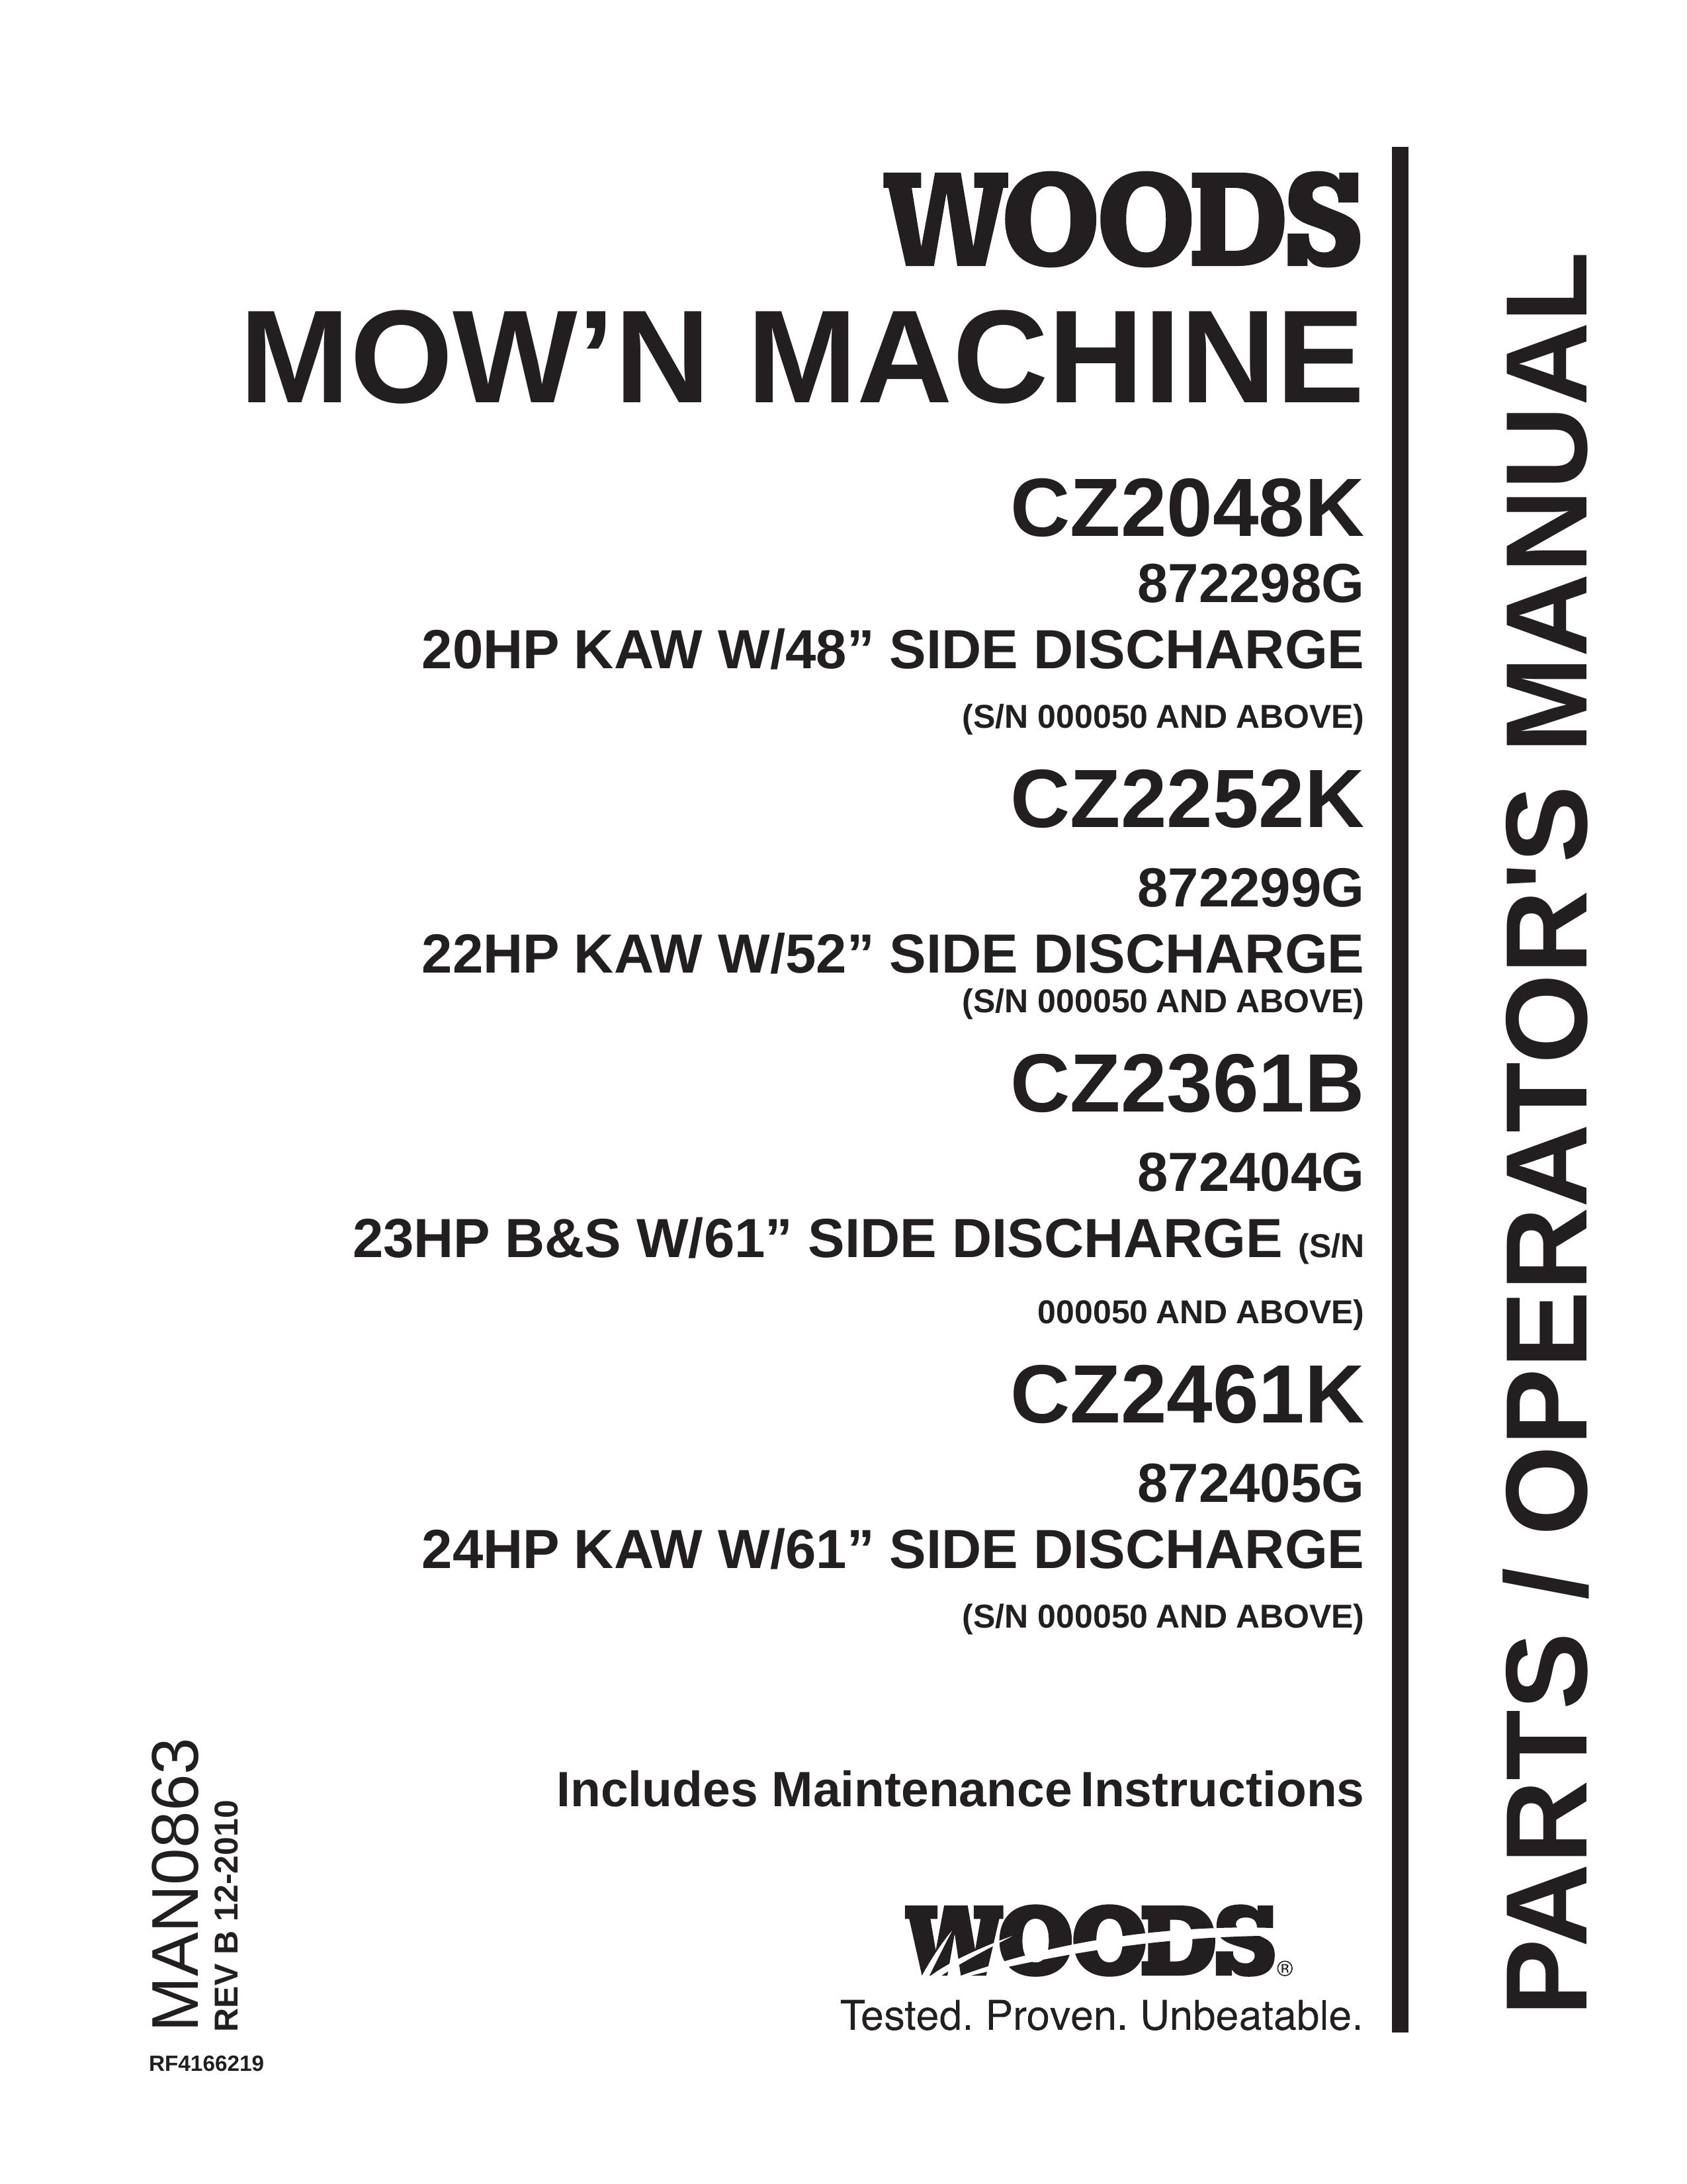 Woods Equipment CZ2361B Lawn Mower User Manual